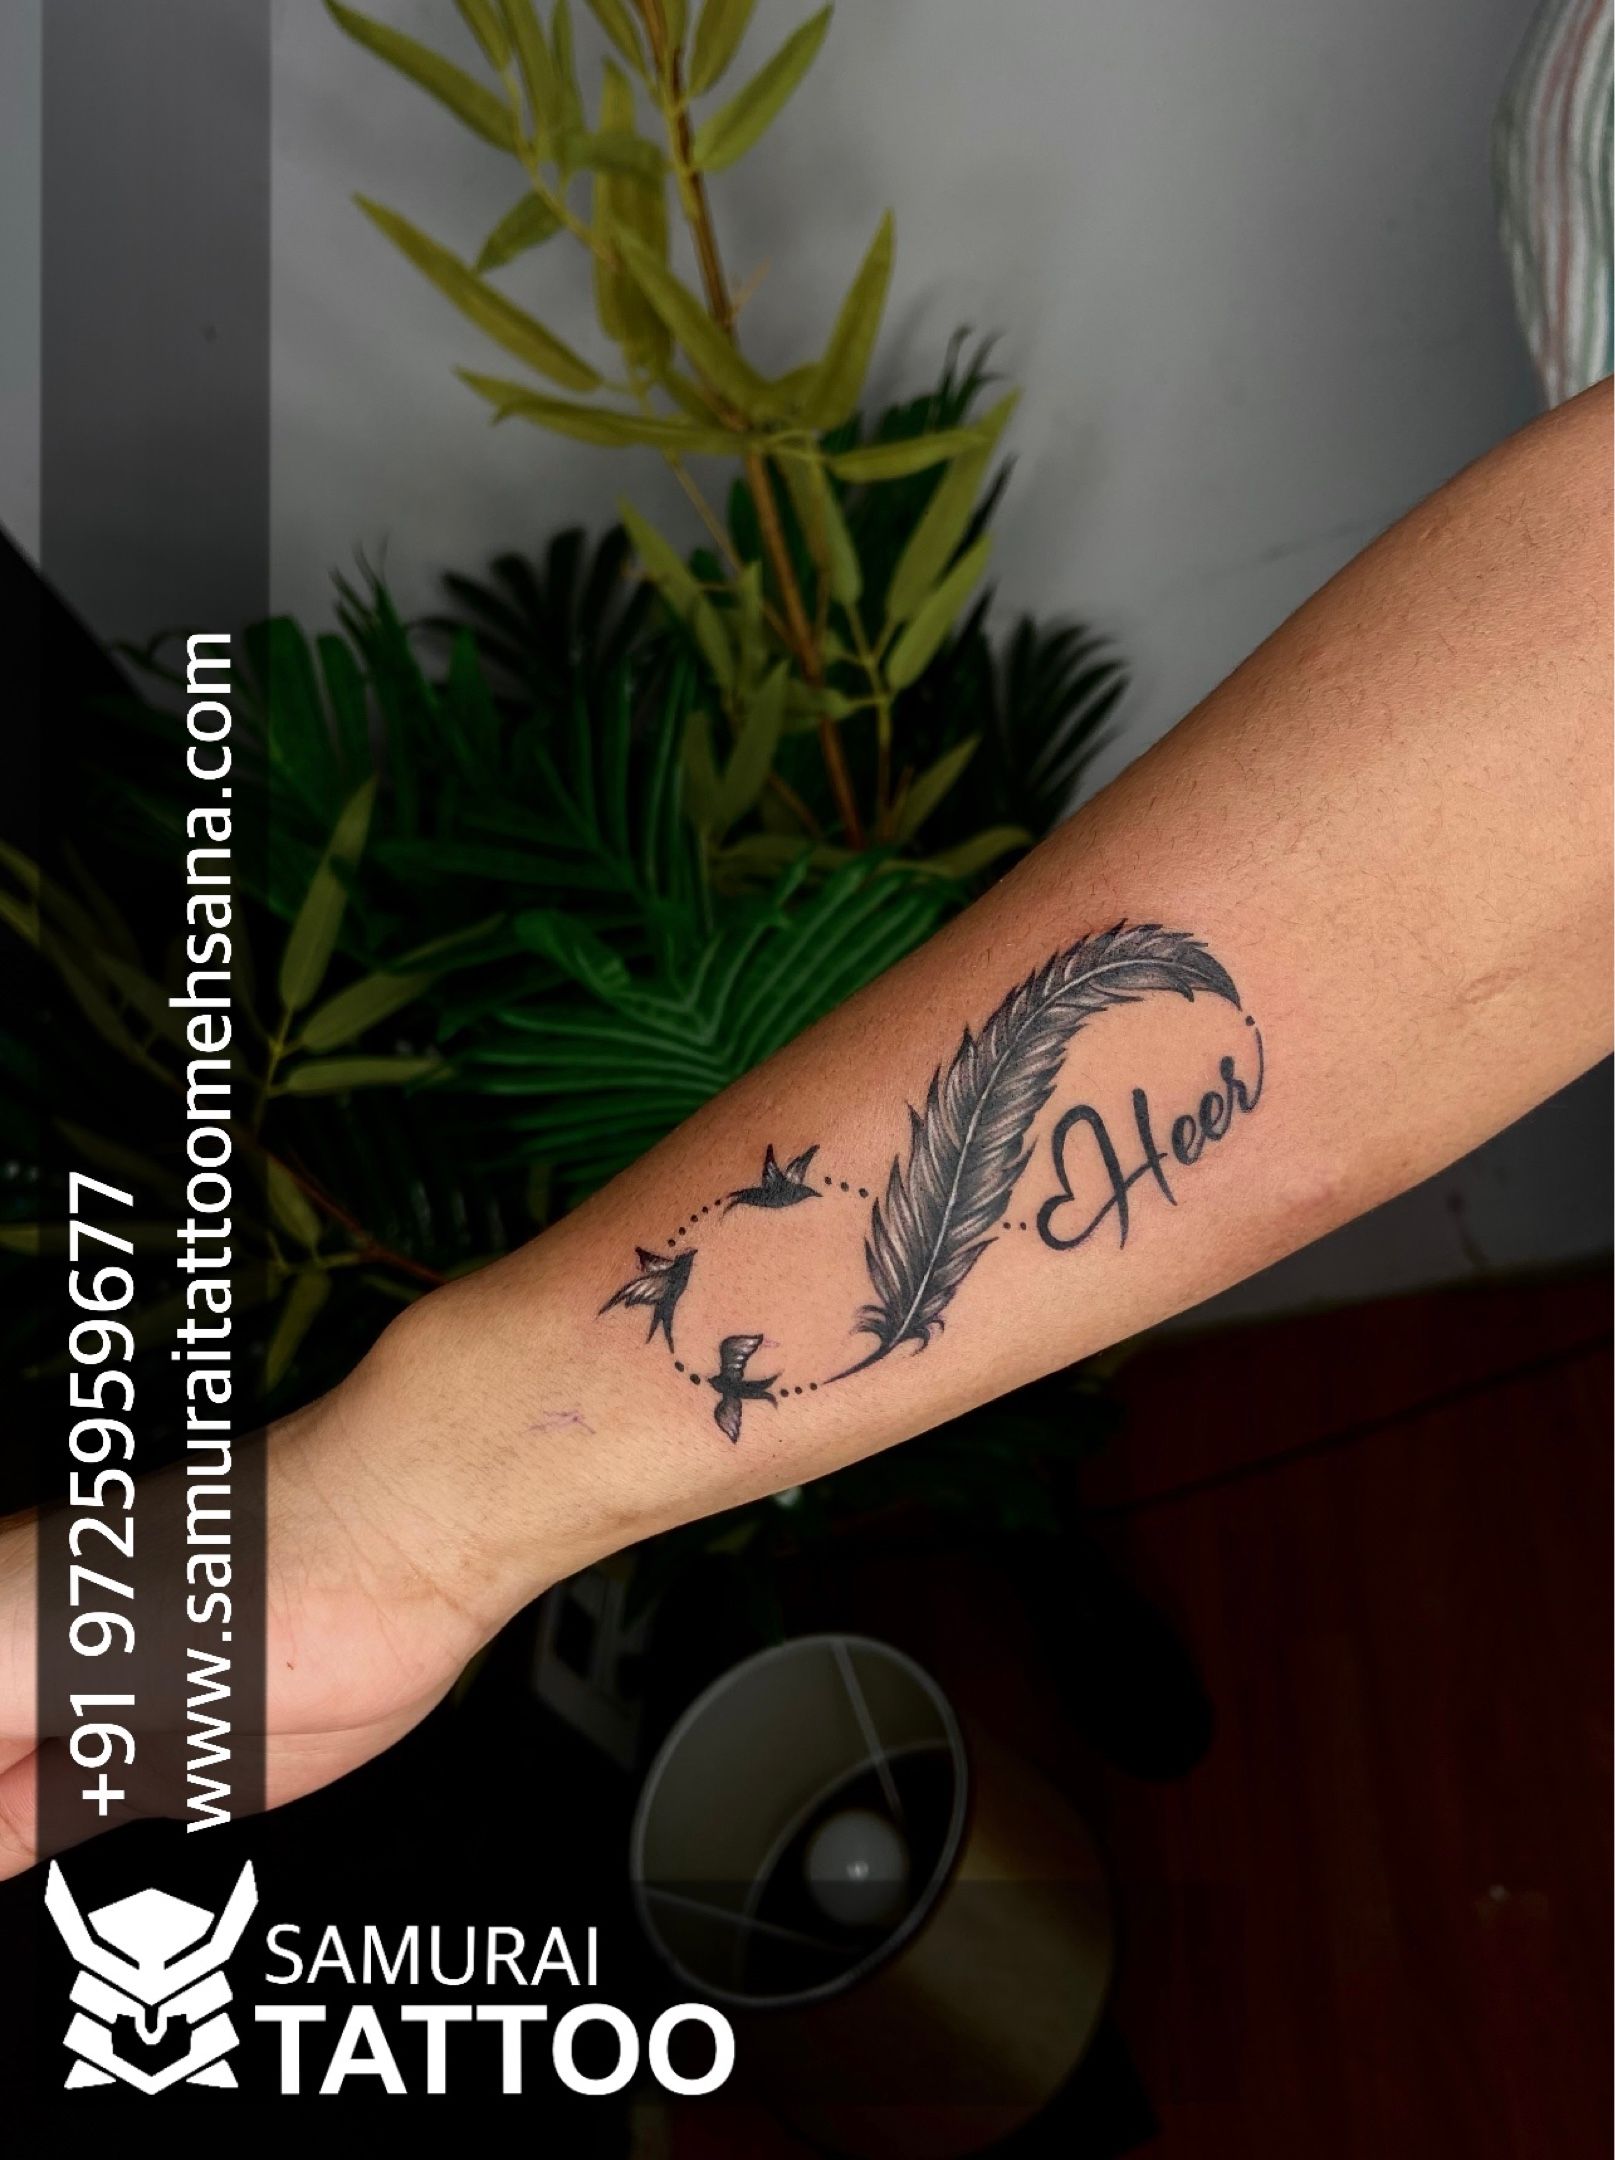 INKredible Tattoos  Name Tattoodetailed inkredibletattoos tattoo  inked Arm  work skillful colors shanky font  Facebook